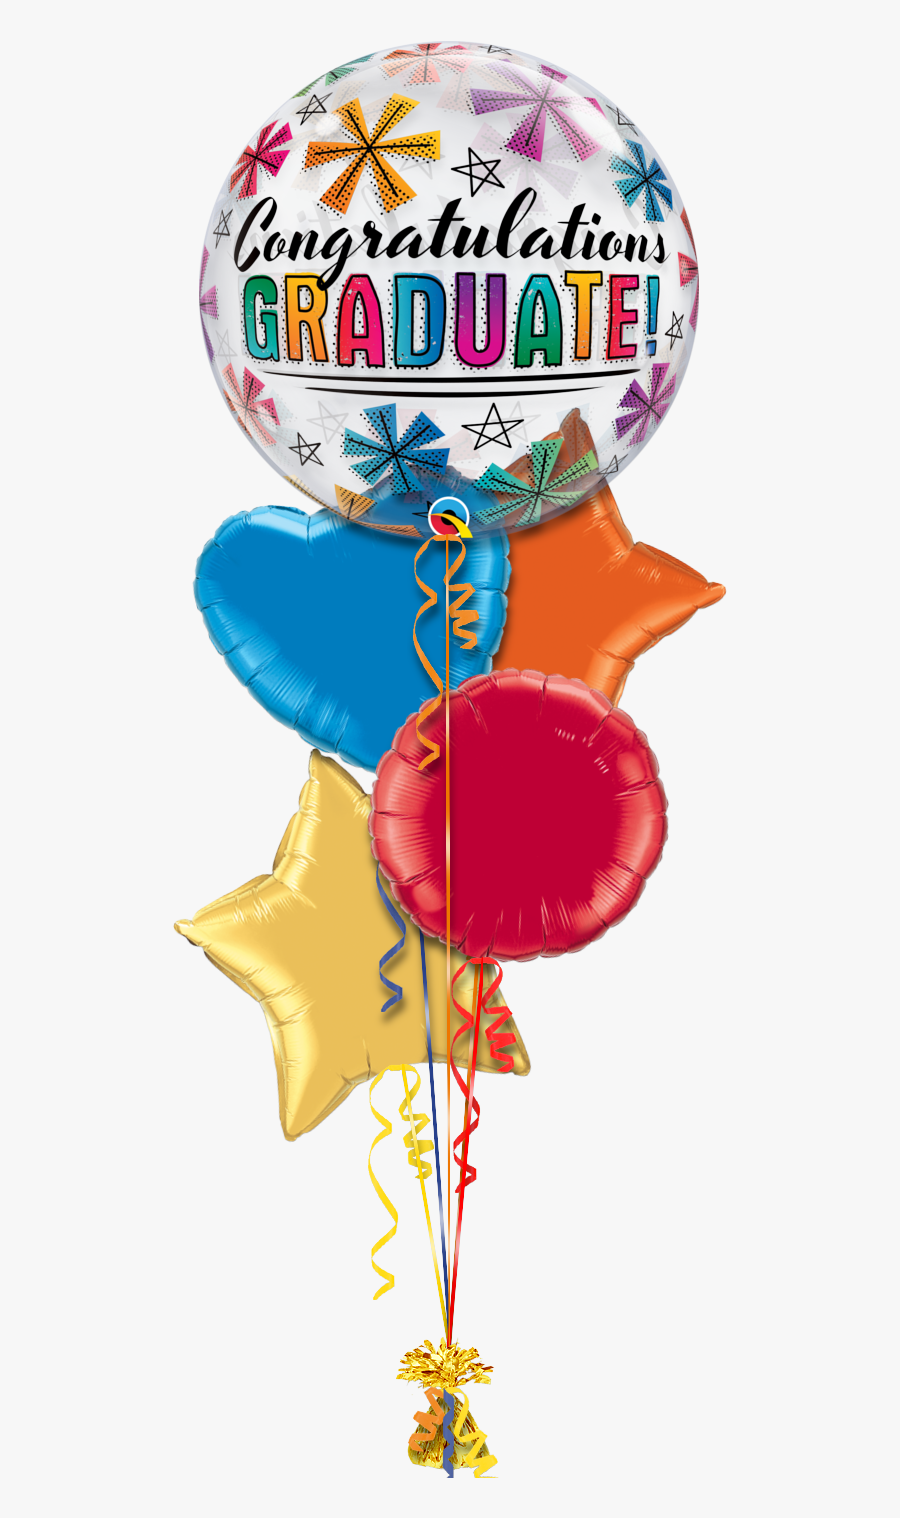 Congratulations Graduate Bubble Graduation Balloon - Congratulations Graduation Balloons, Transparent Clipart